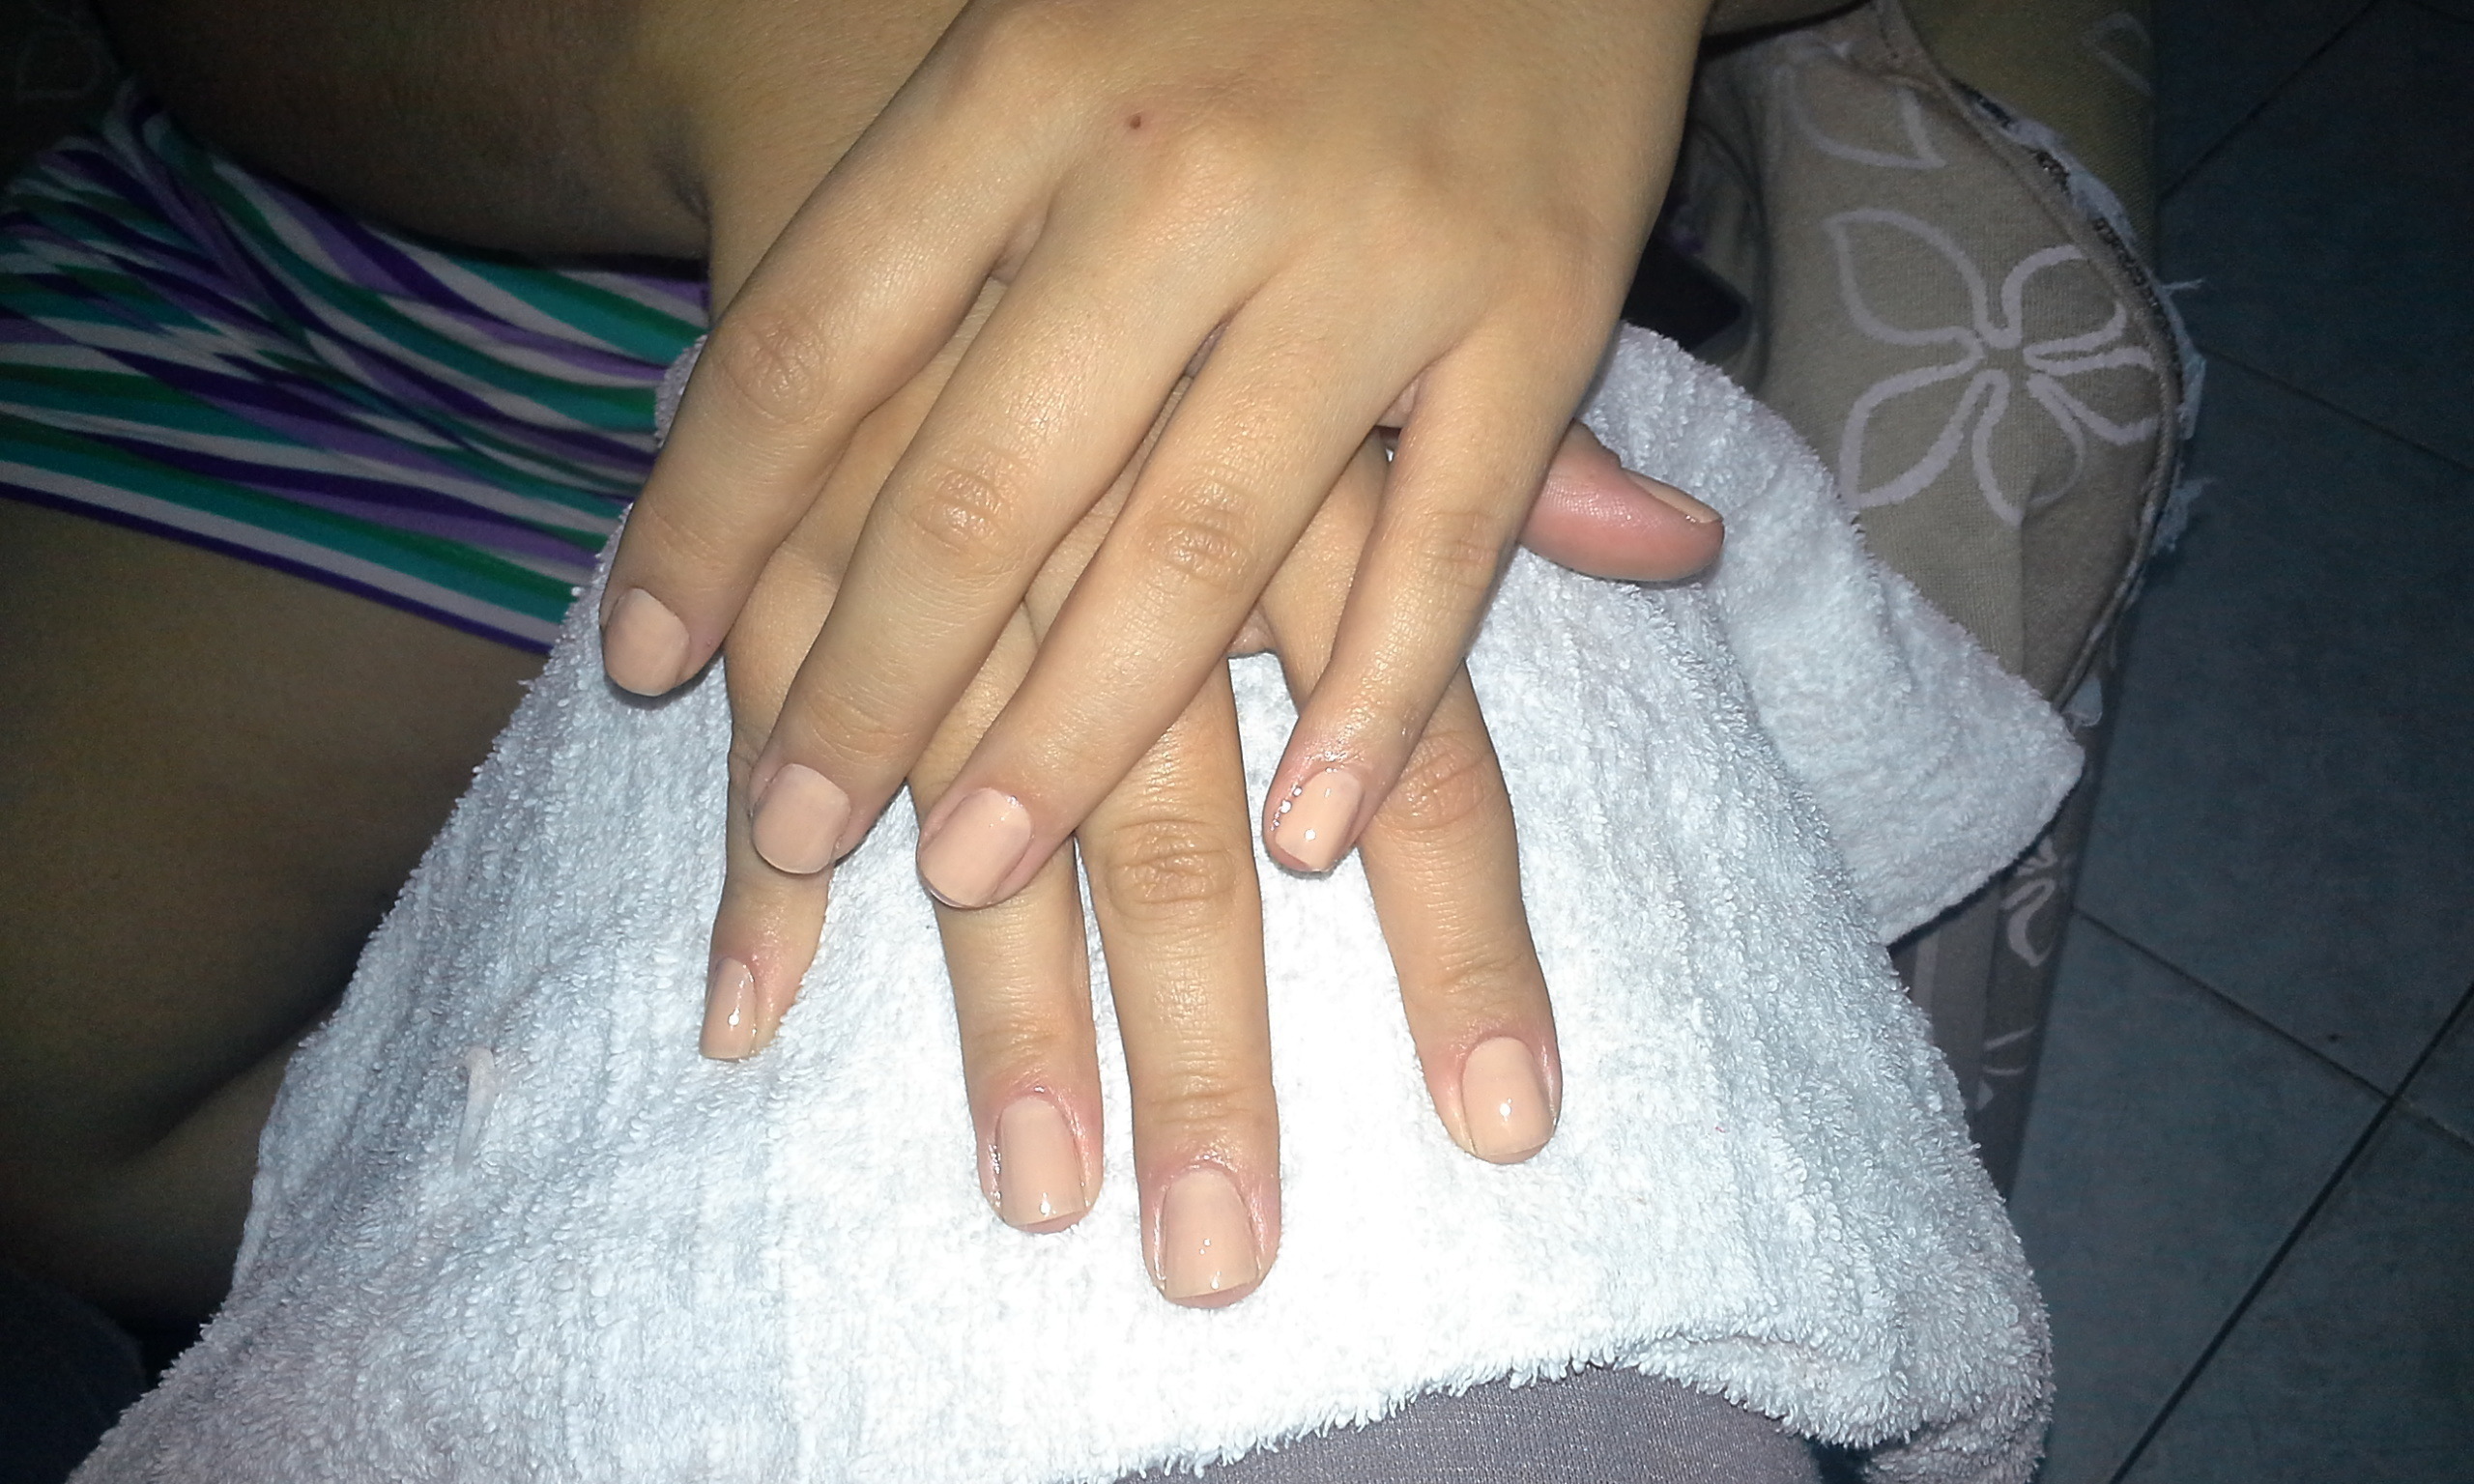  Cliente escolheu a cor  Nude.   #manicure unha manicure e pedicure